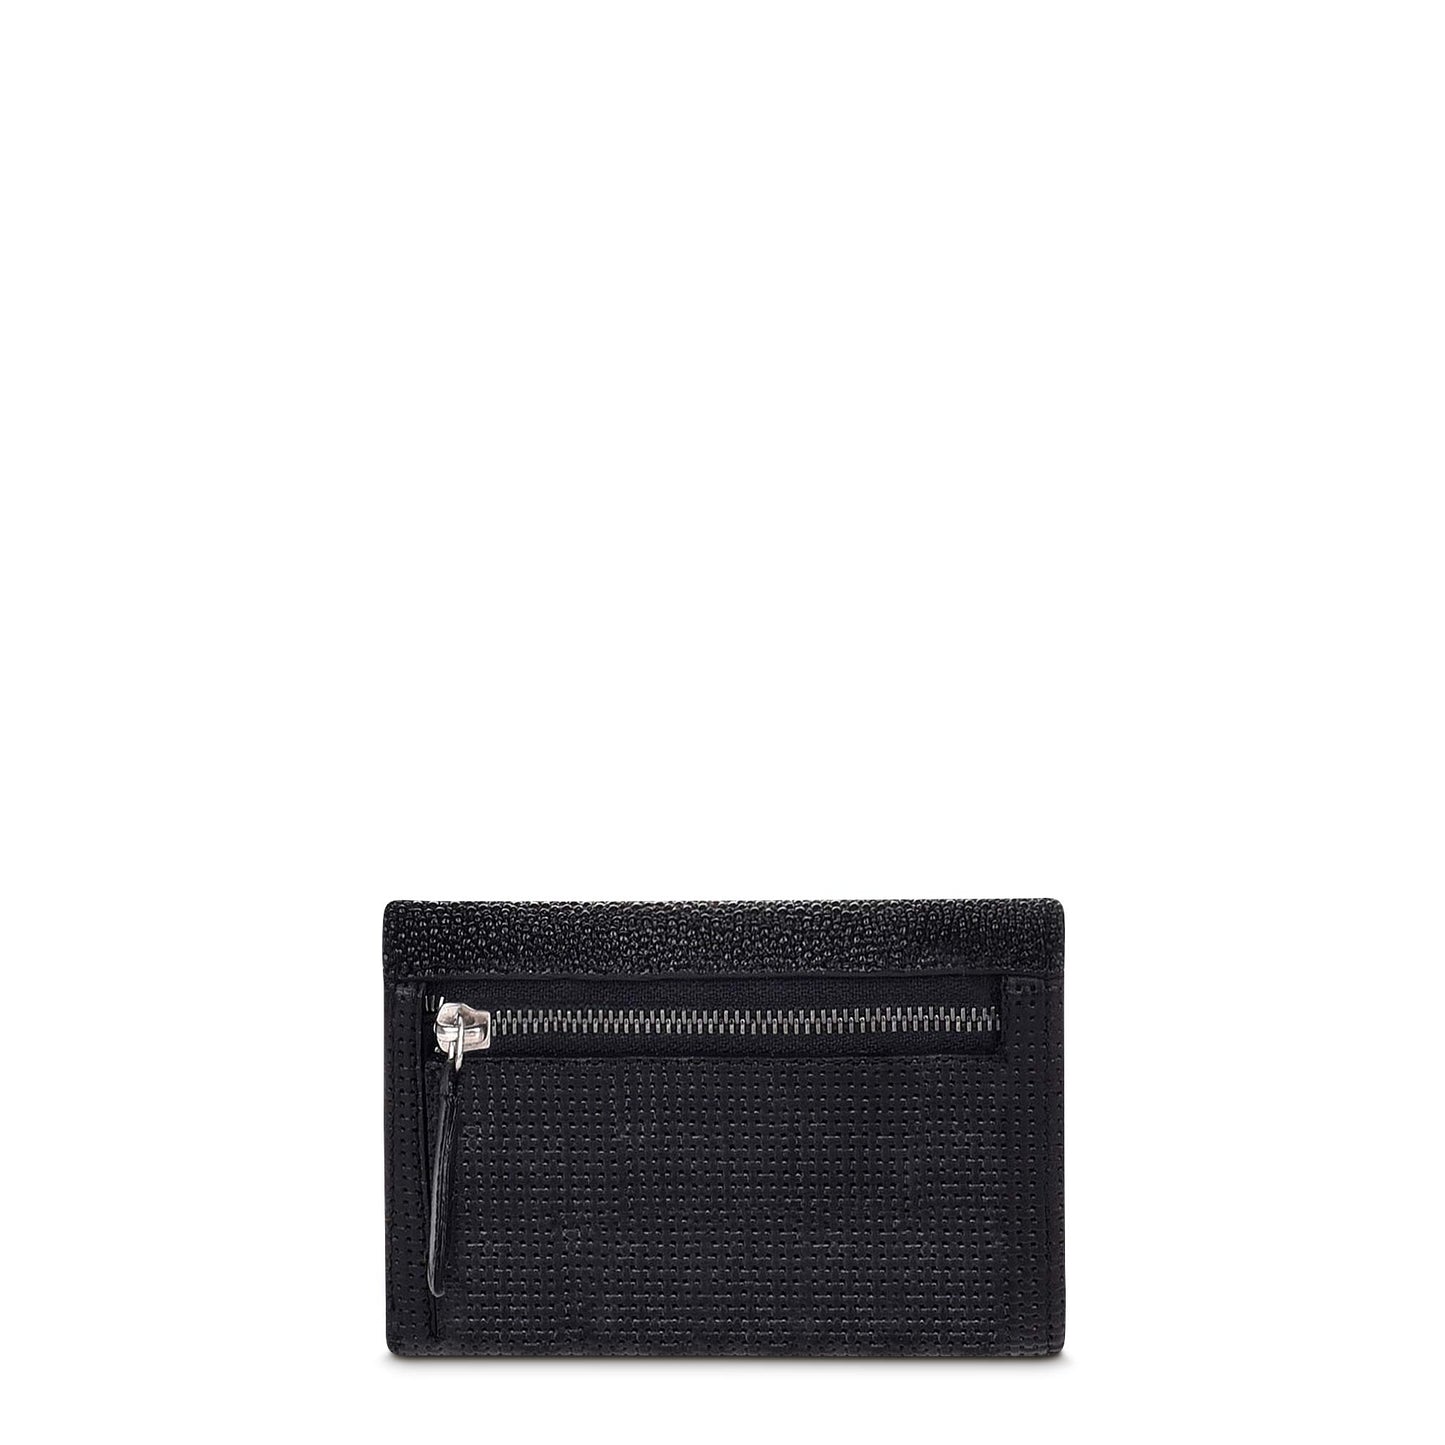 Louis Vuitton Brown Monogram Logo Saffiano Leather Trifold Wallet Authentic